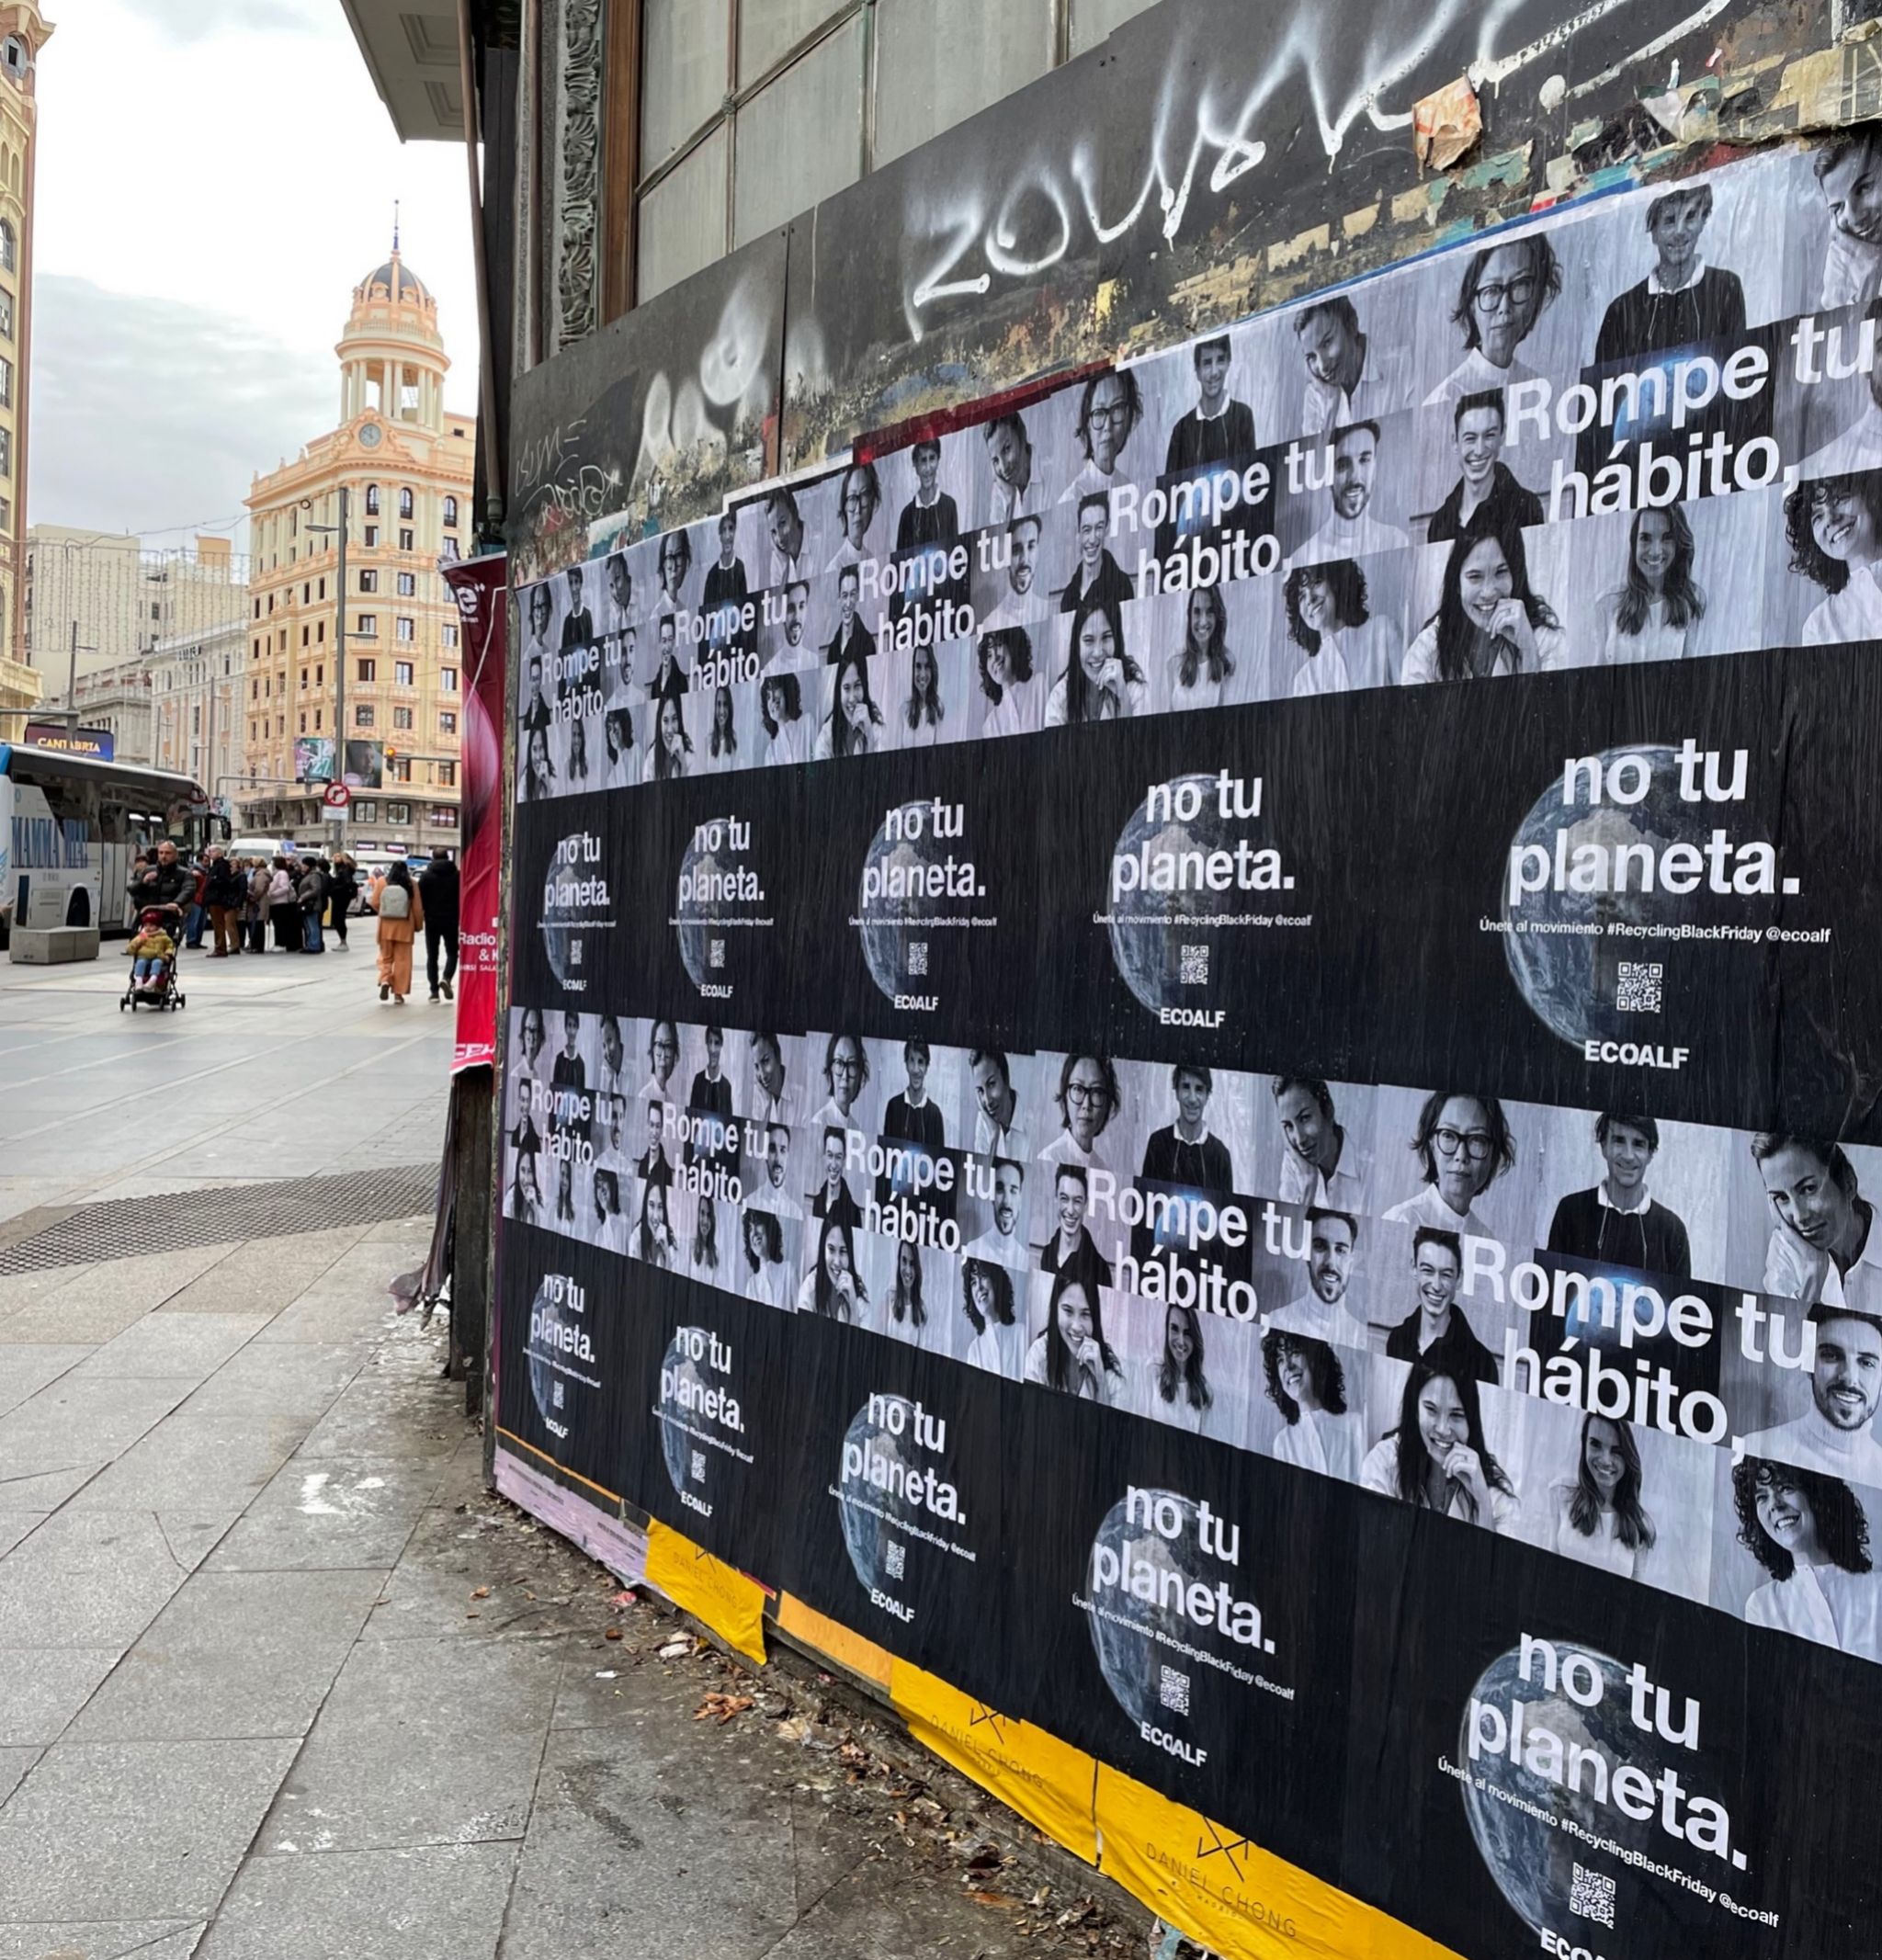 Pegada de carteles de Ecoalf en el centro de Madrid bajo el lema  "Rompe tu hábito, no tu planeta".